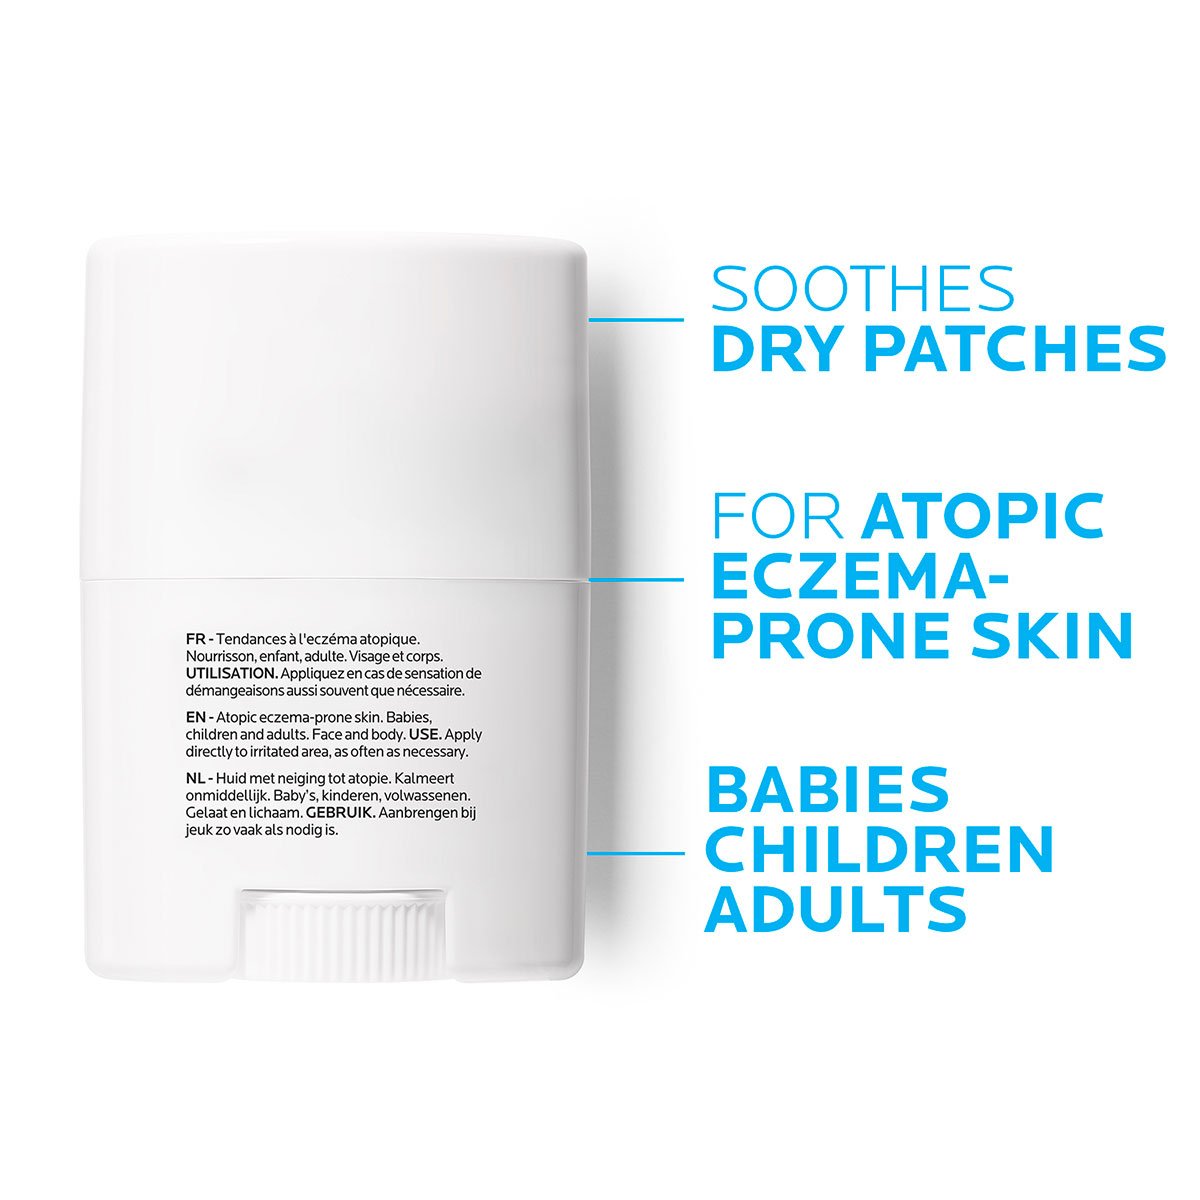 La Roche Posay ProductPage Eczema Lipikar Stick AP 15ml 3337875566254 